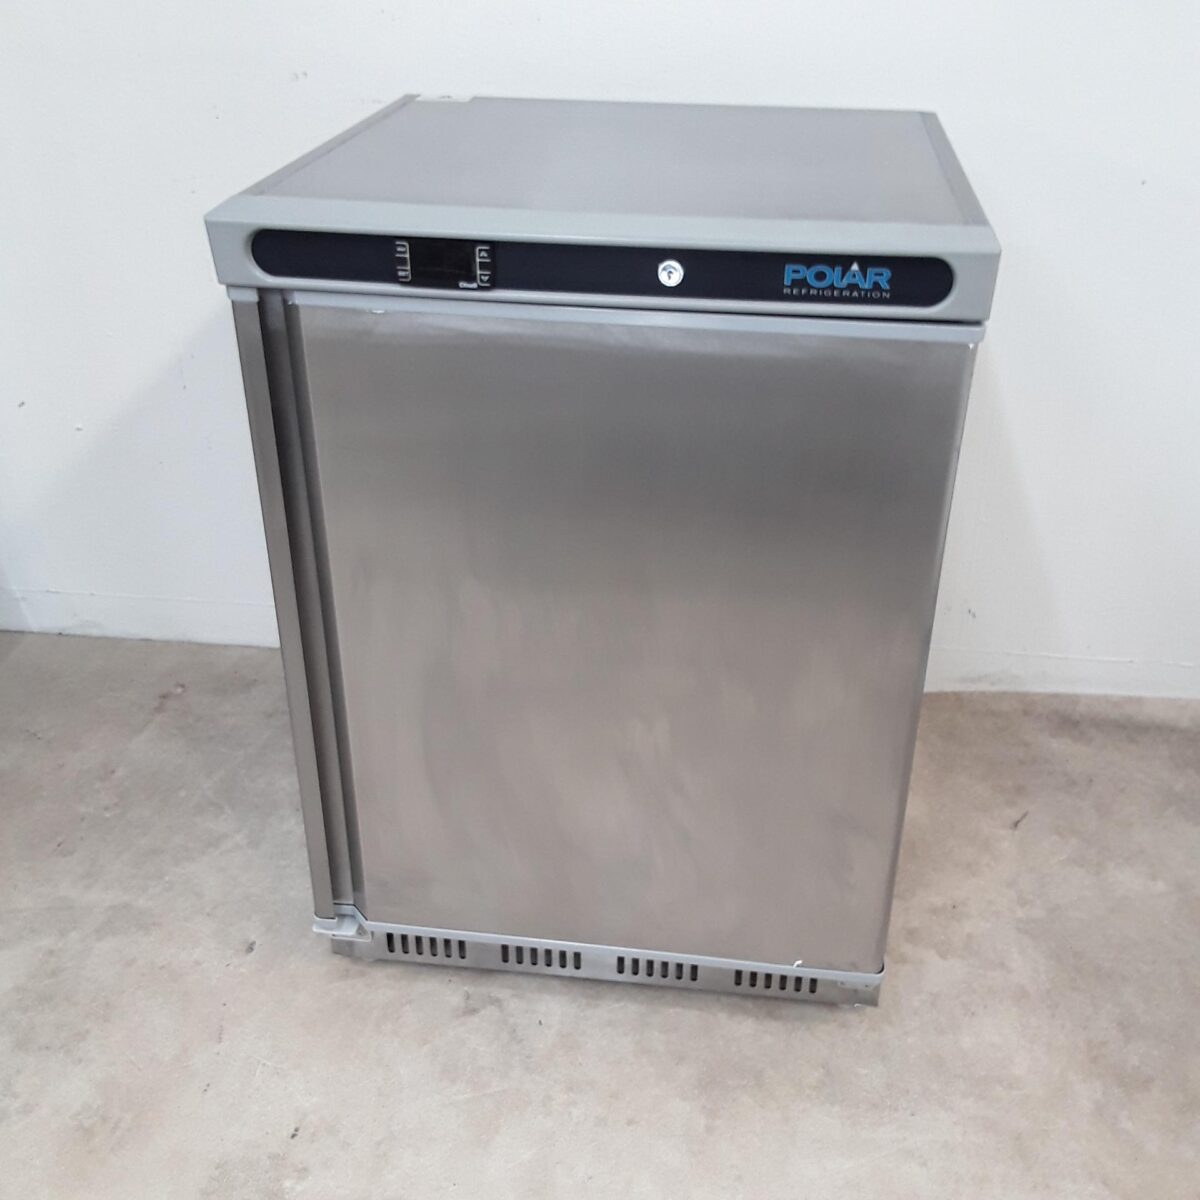 New B Grade Polar CD081 Stainless Under Counter Freezer 60cmW x 60cmD x 85cmH